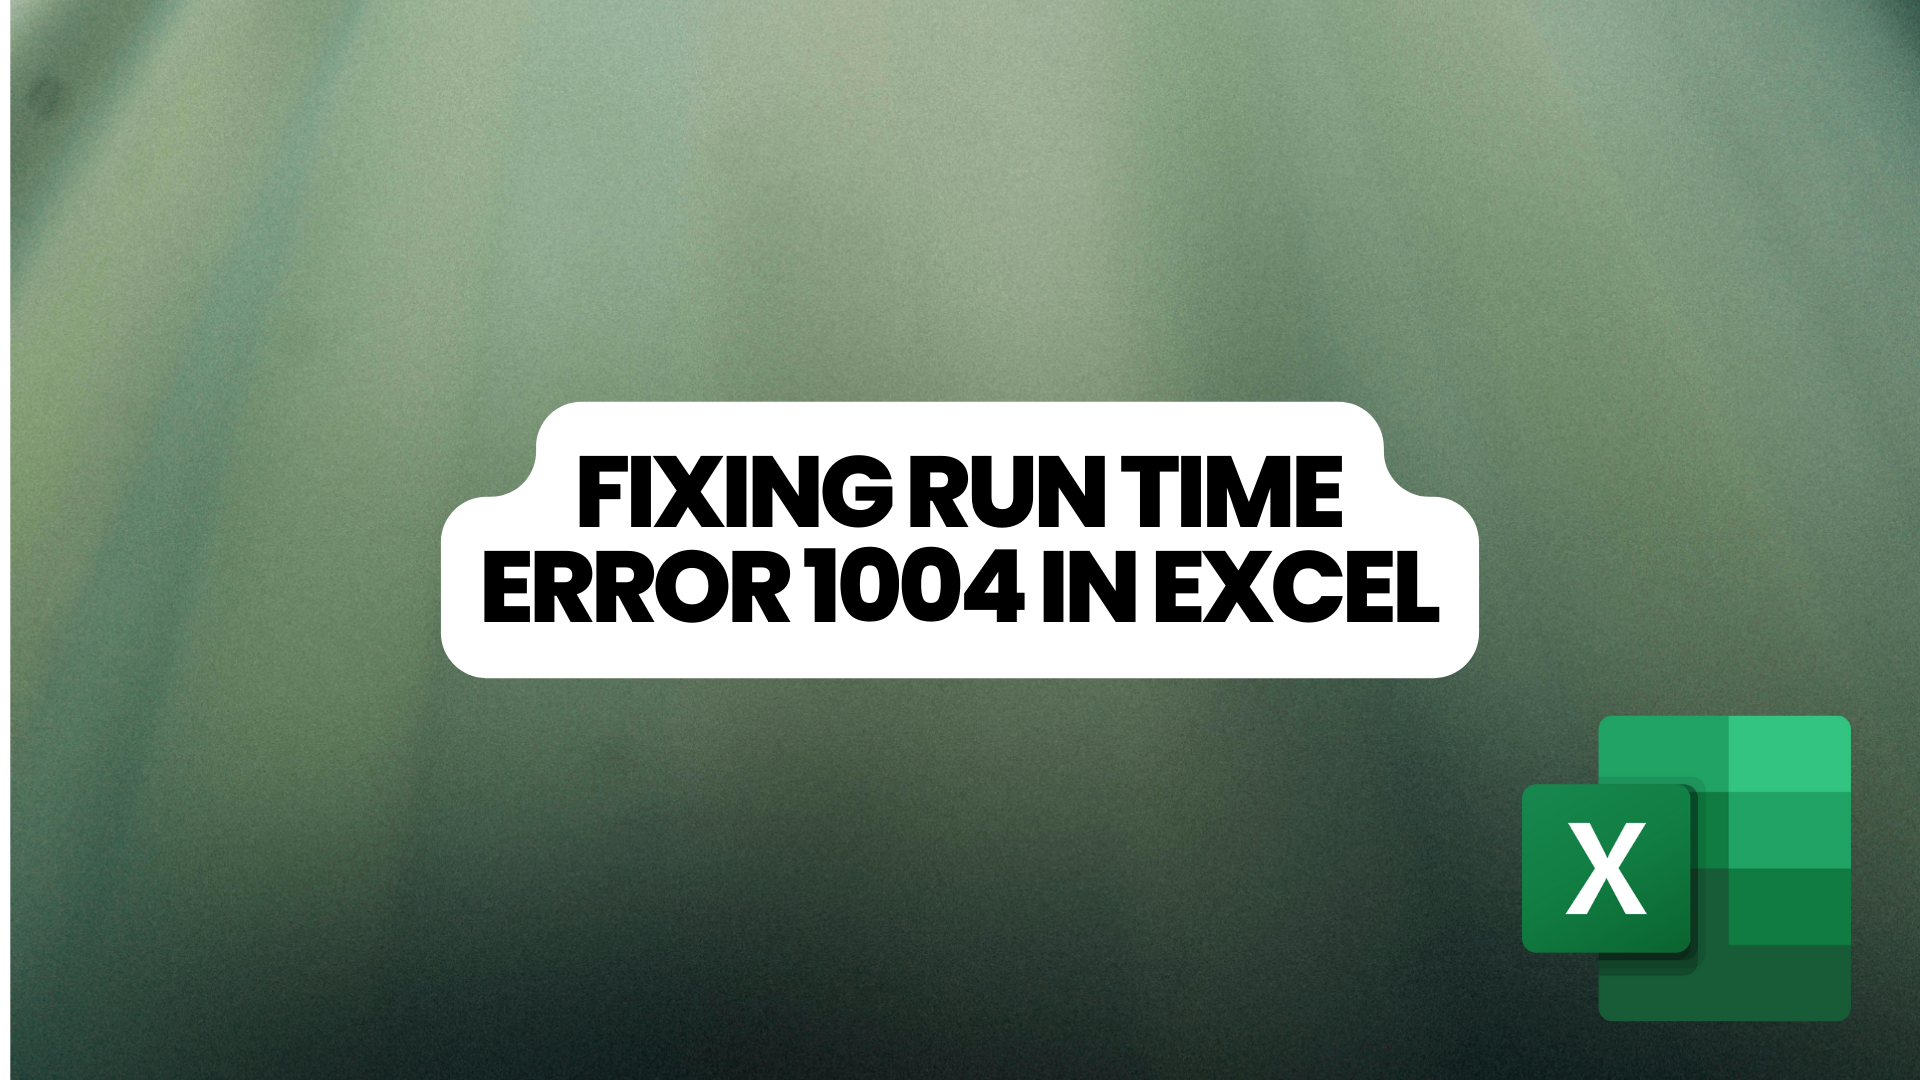 Fixing Run Time Error 1004 in Excel